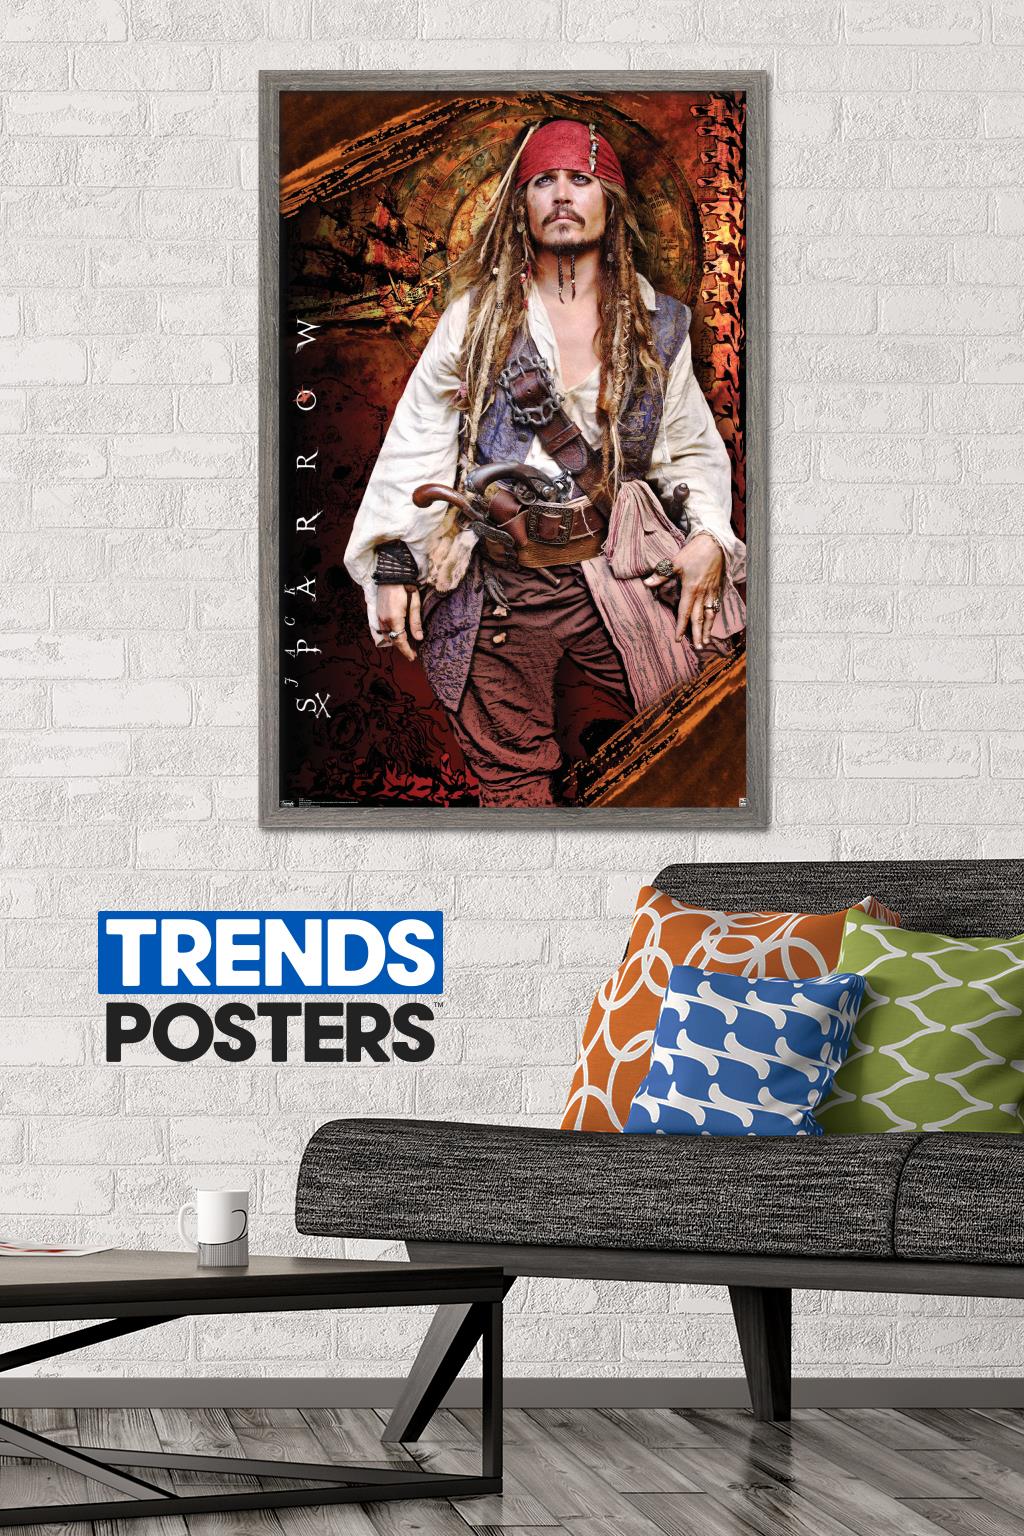 Disney Pirates of the Caribbean: On Stranger Tides - Johnny Depp Wall Poster, 22.375" x 34", Framed - image 2 of 5